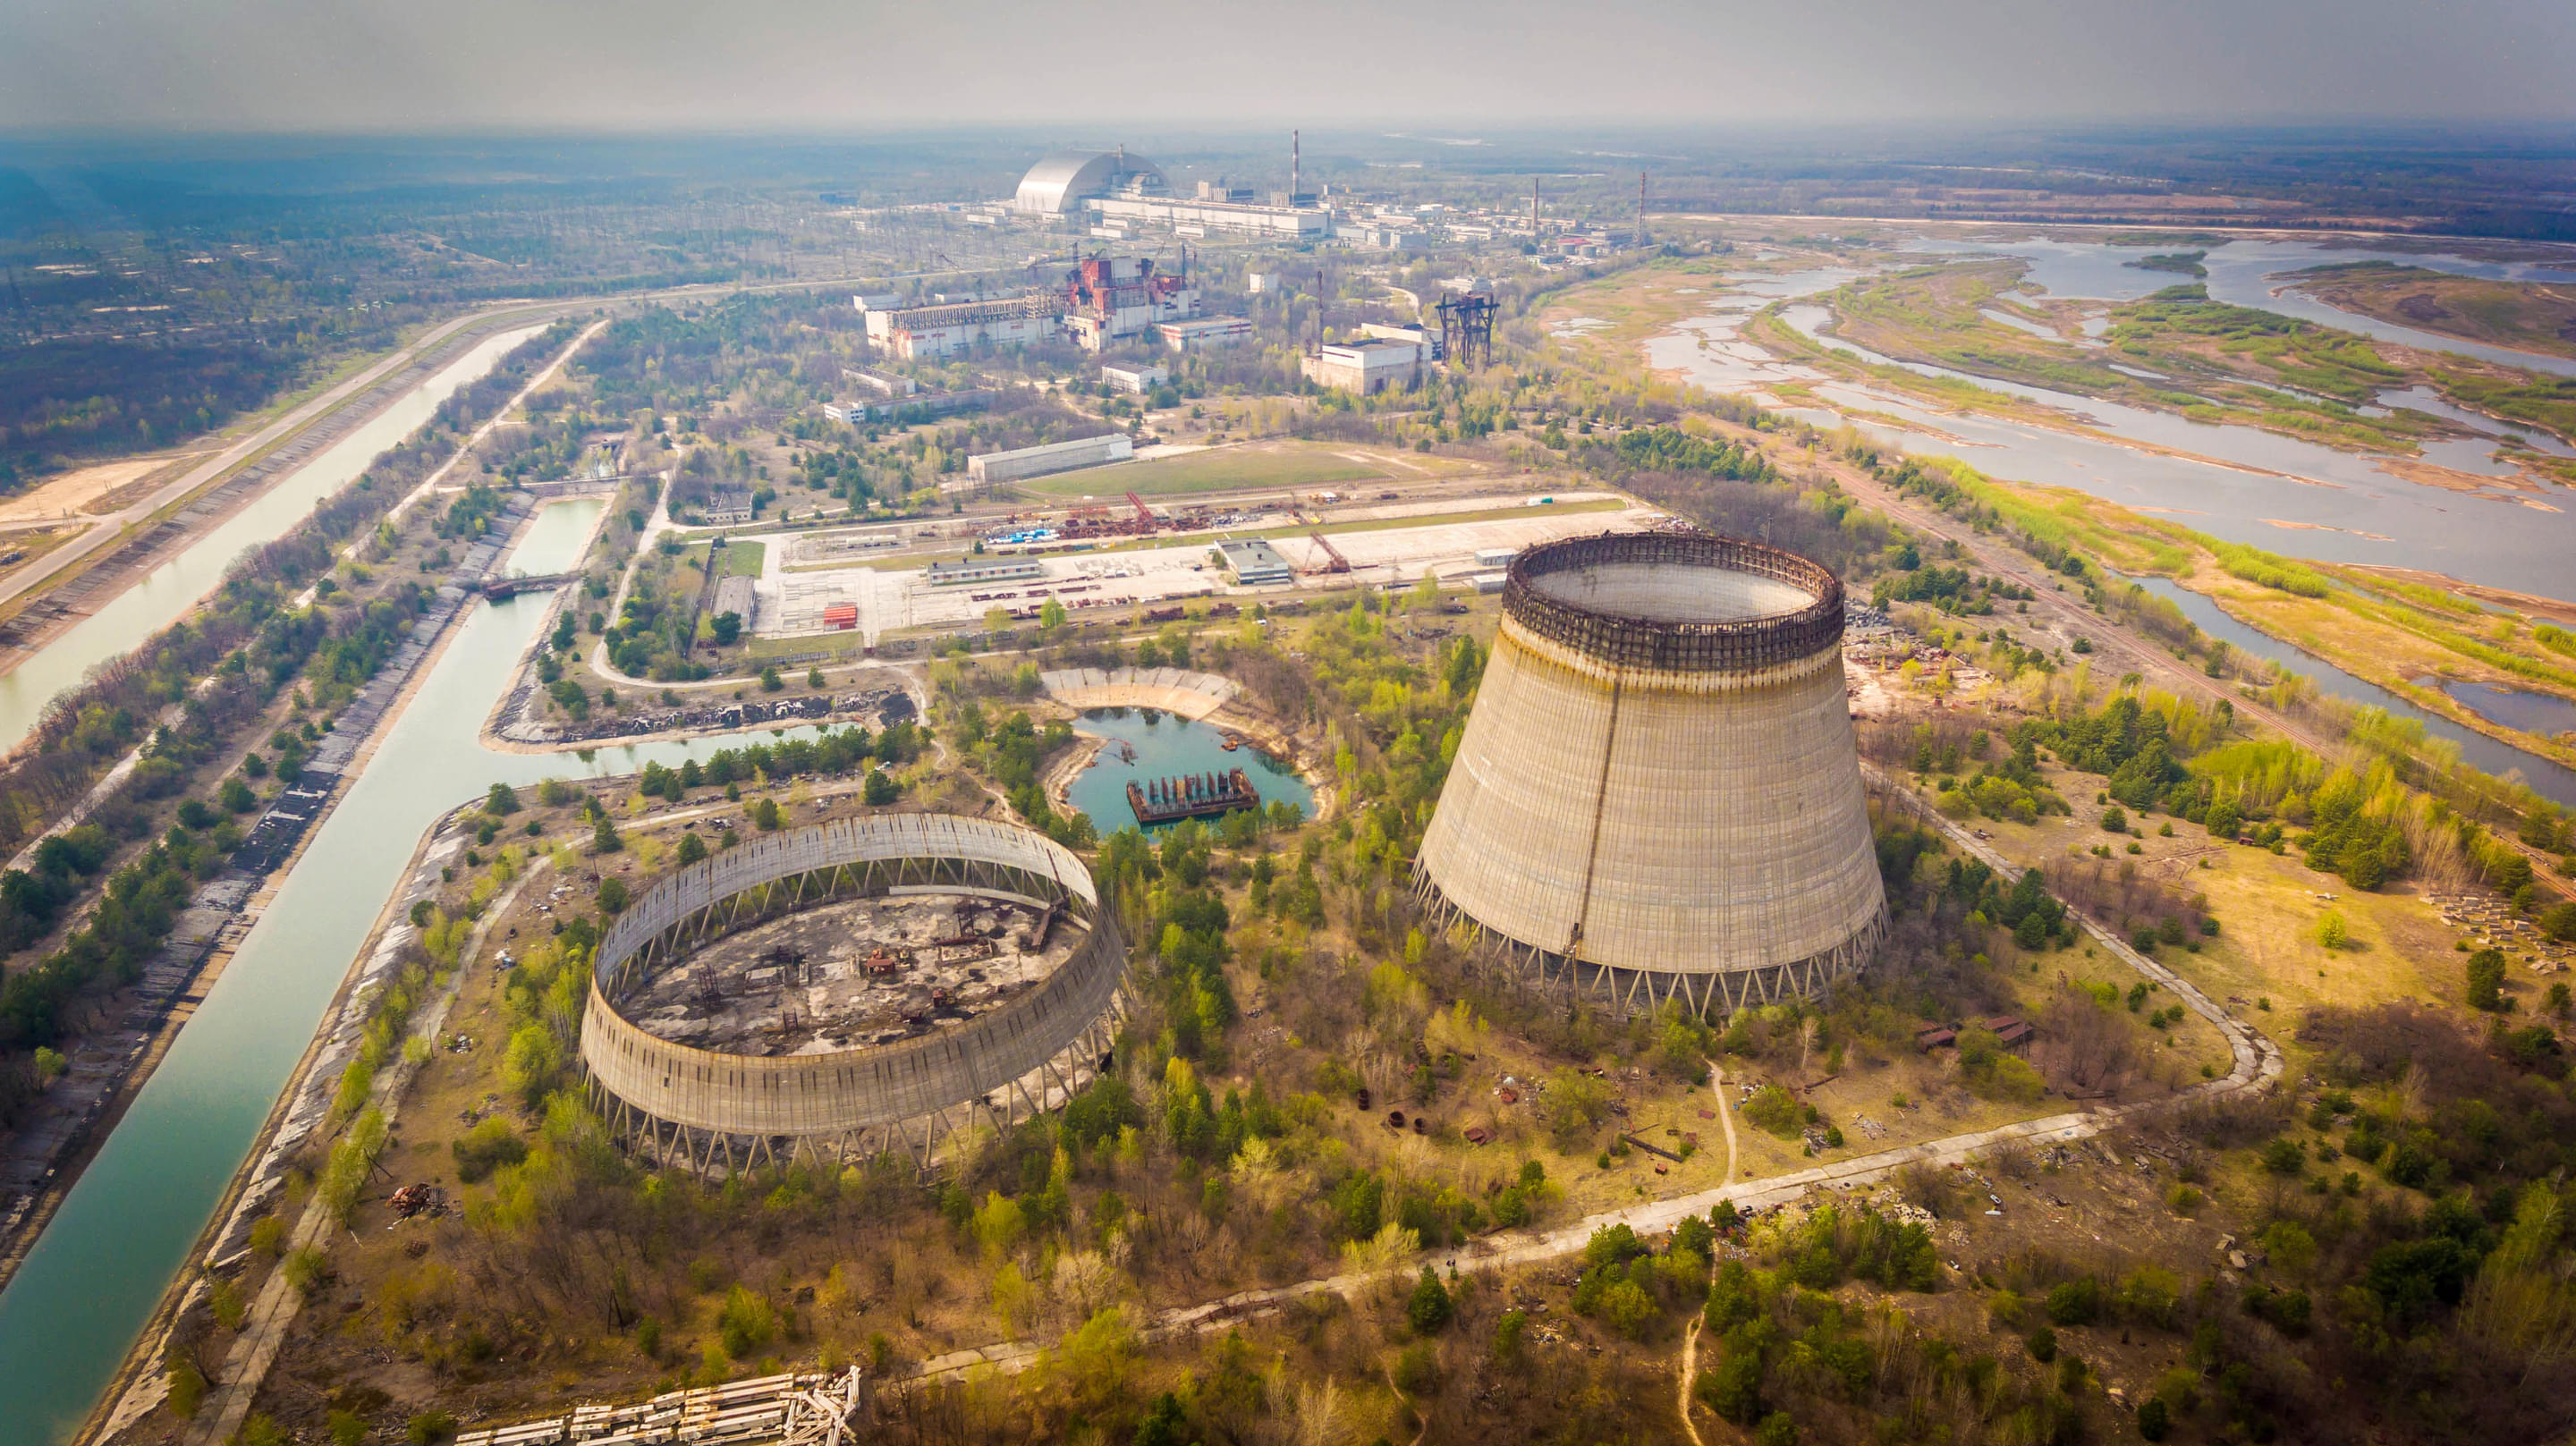 Chernobyl Overview